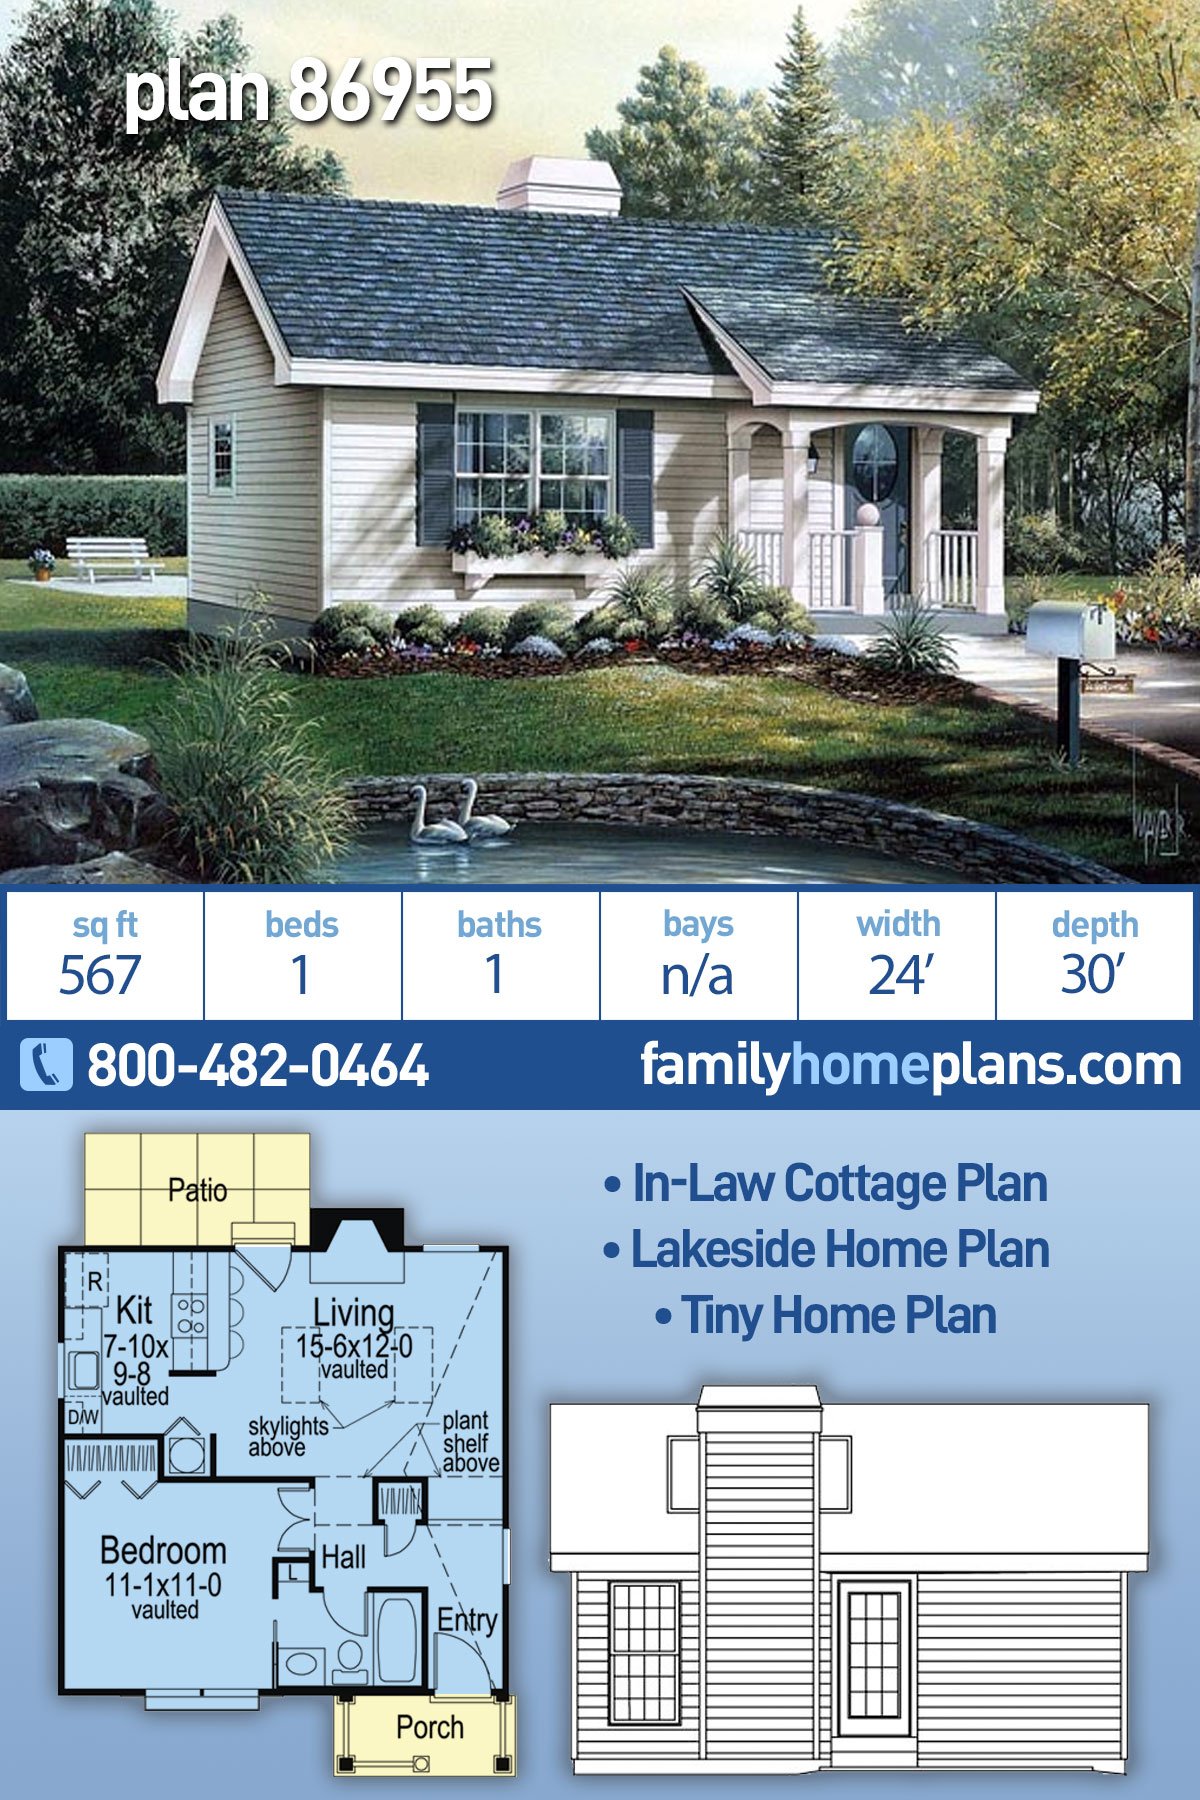 House Plan 86955